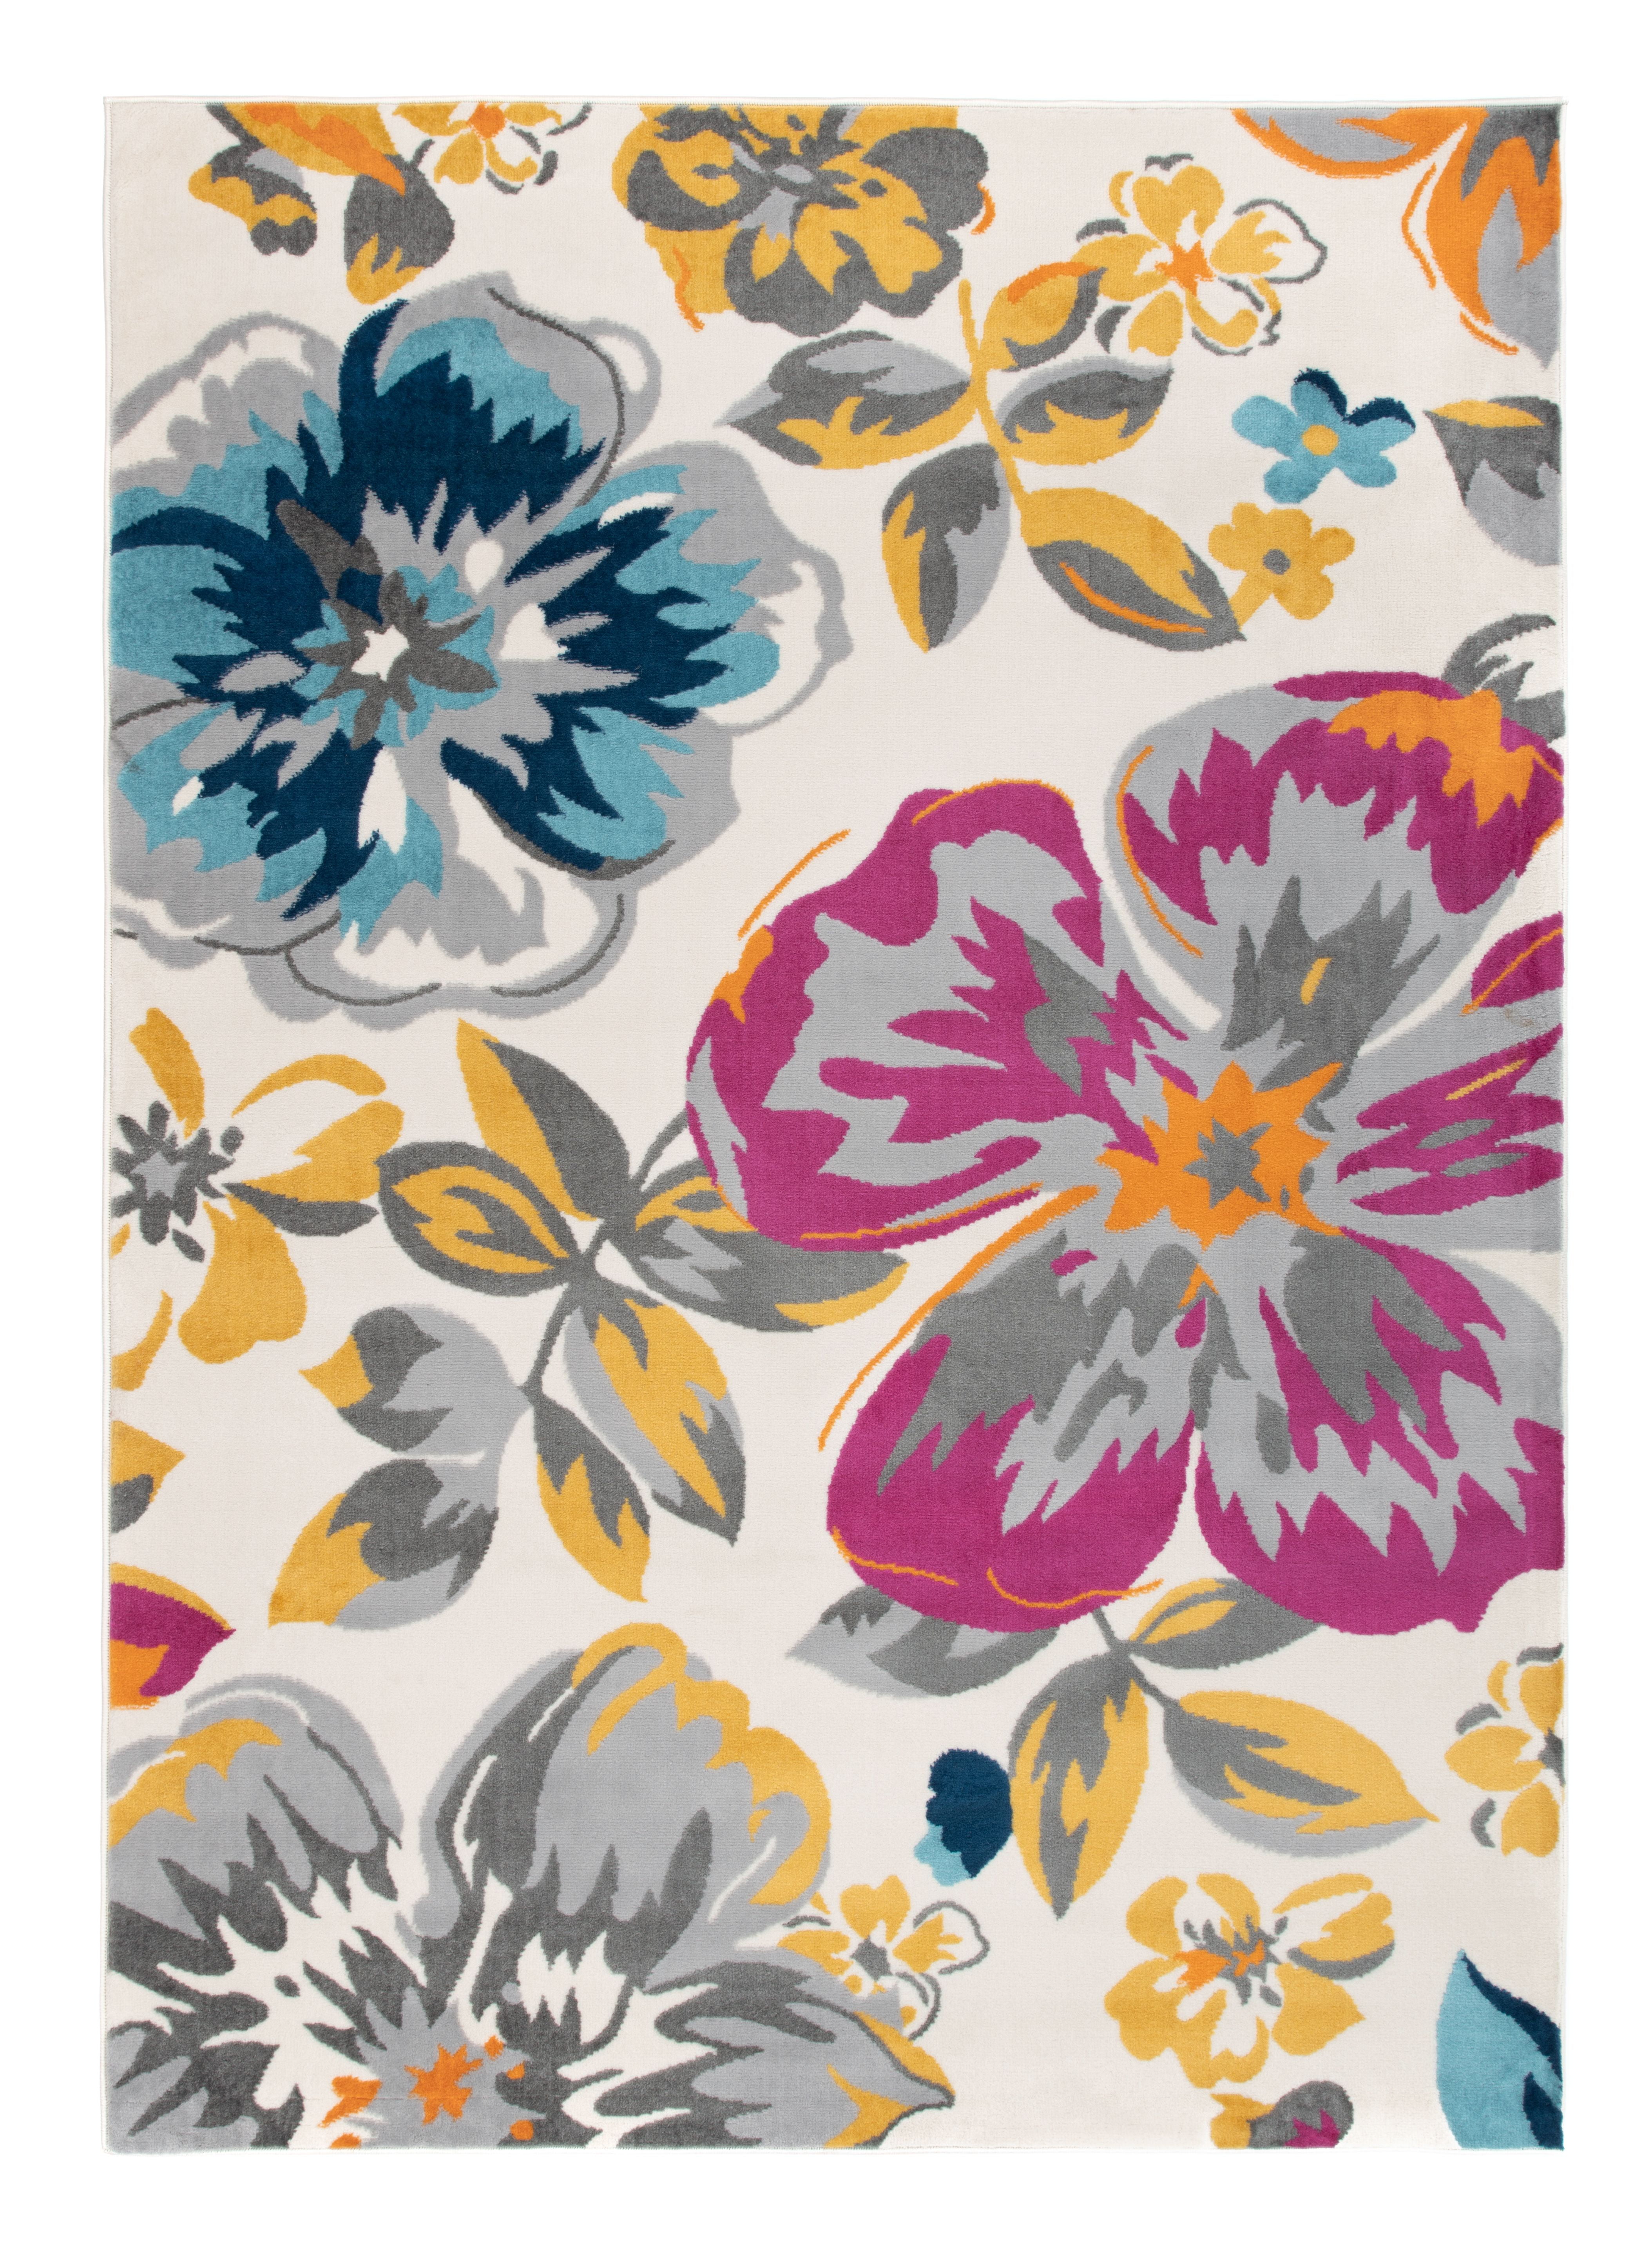 Modern Floral Design Cream Multi Flowers Rug in 120 x 160 cm 4'x5'3" Carpet